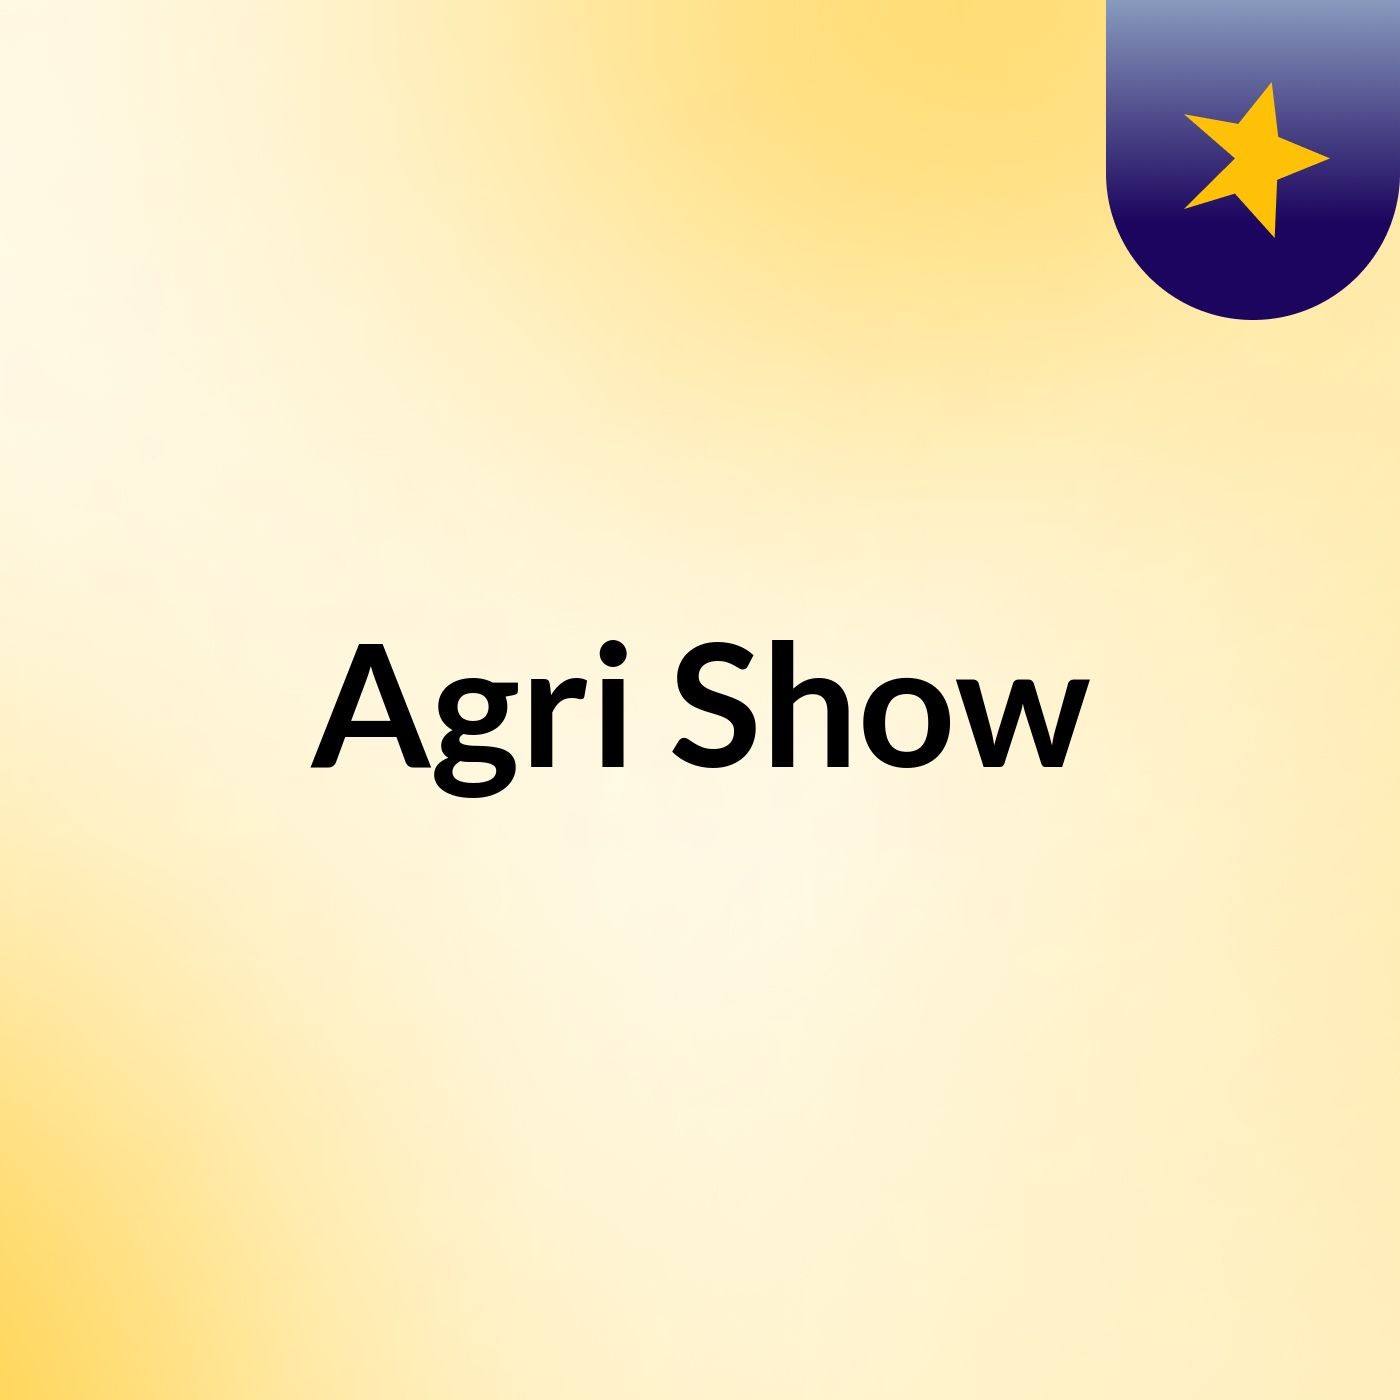 Agri Show